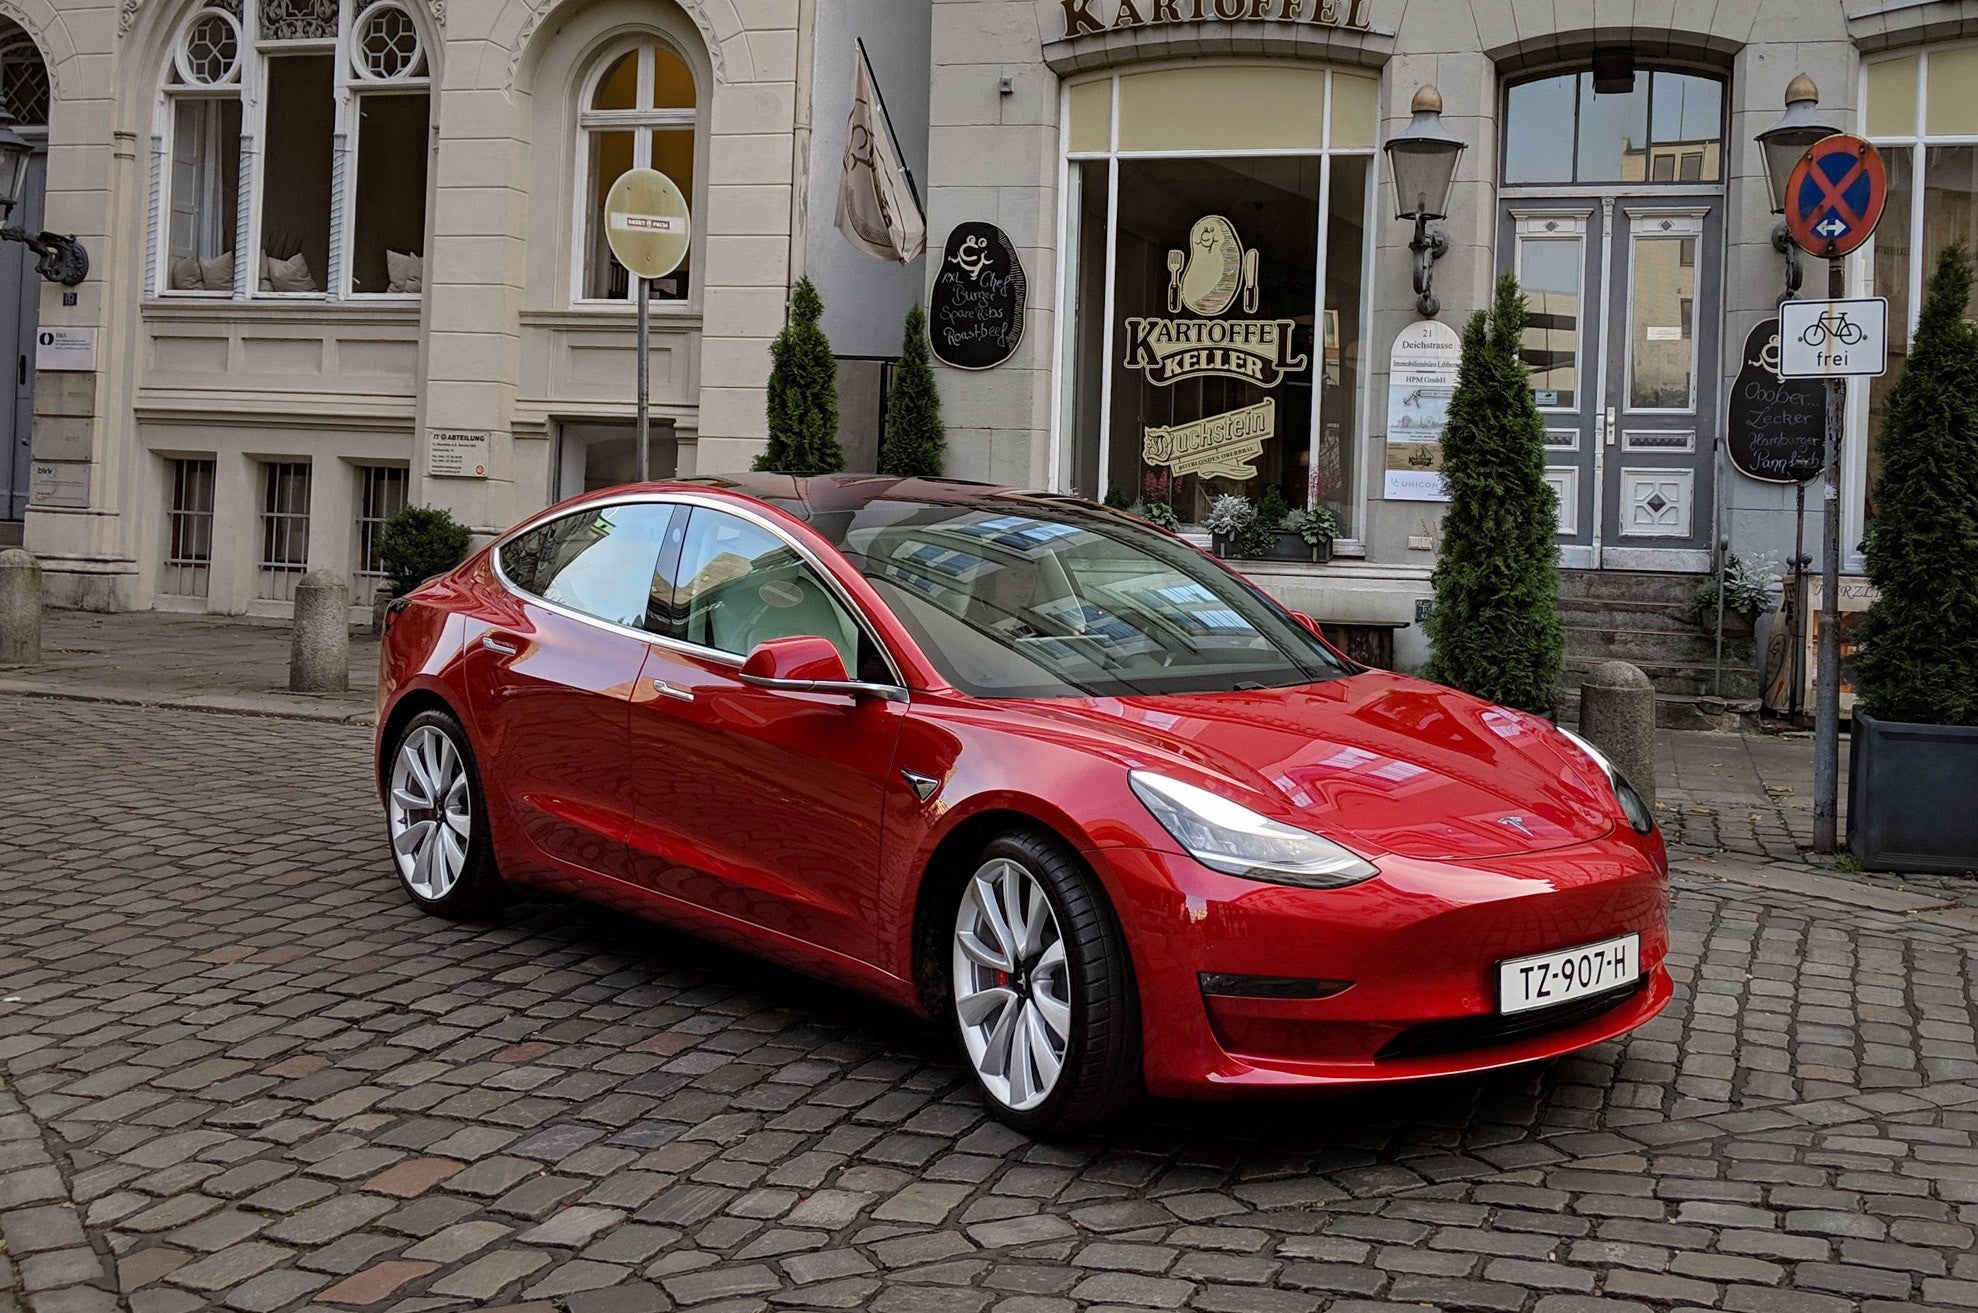 Model 3  Tesla Sverige